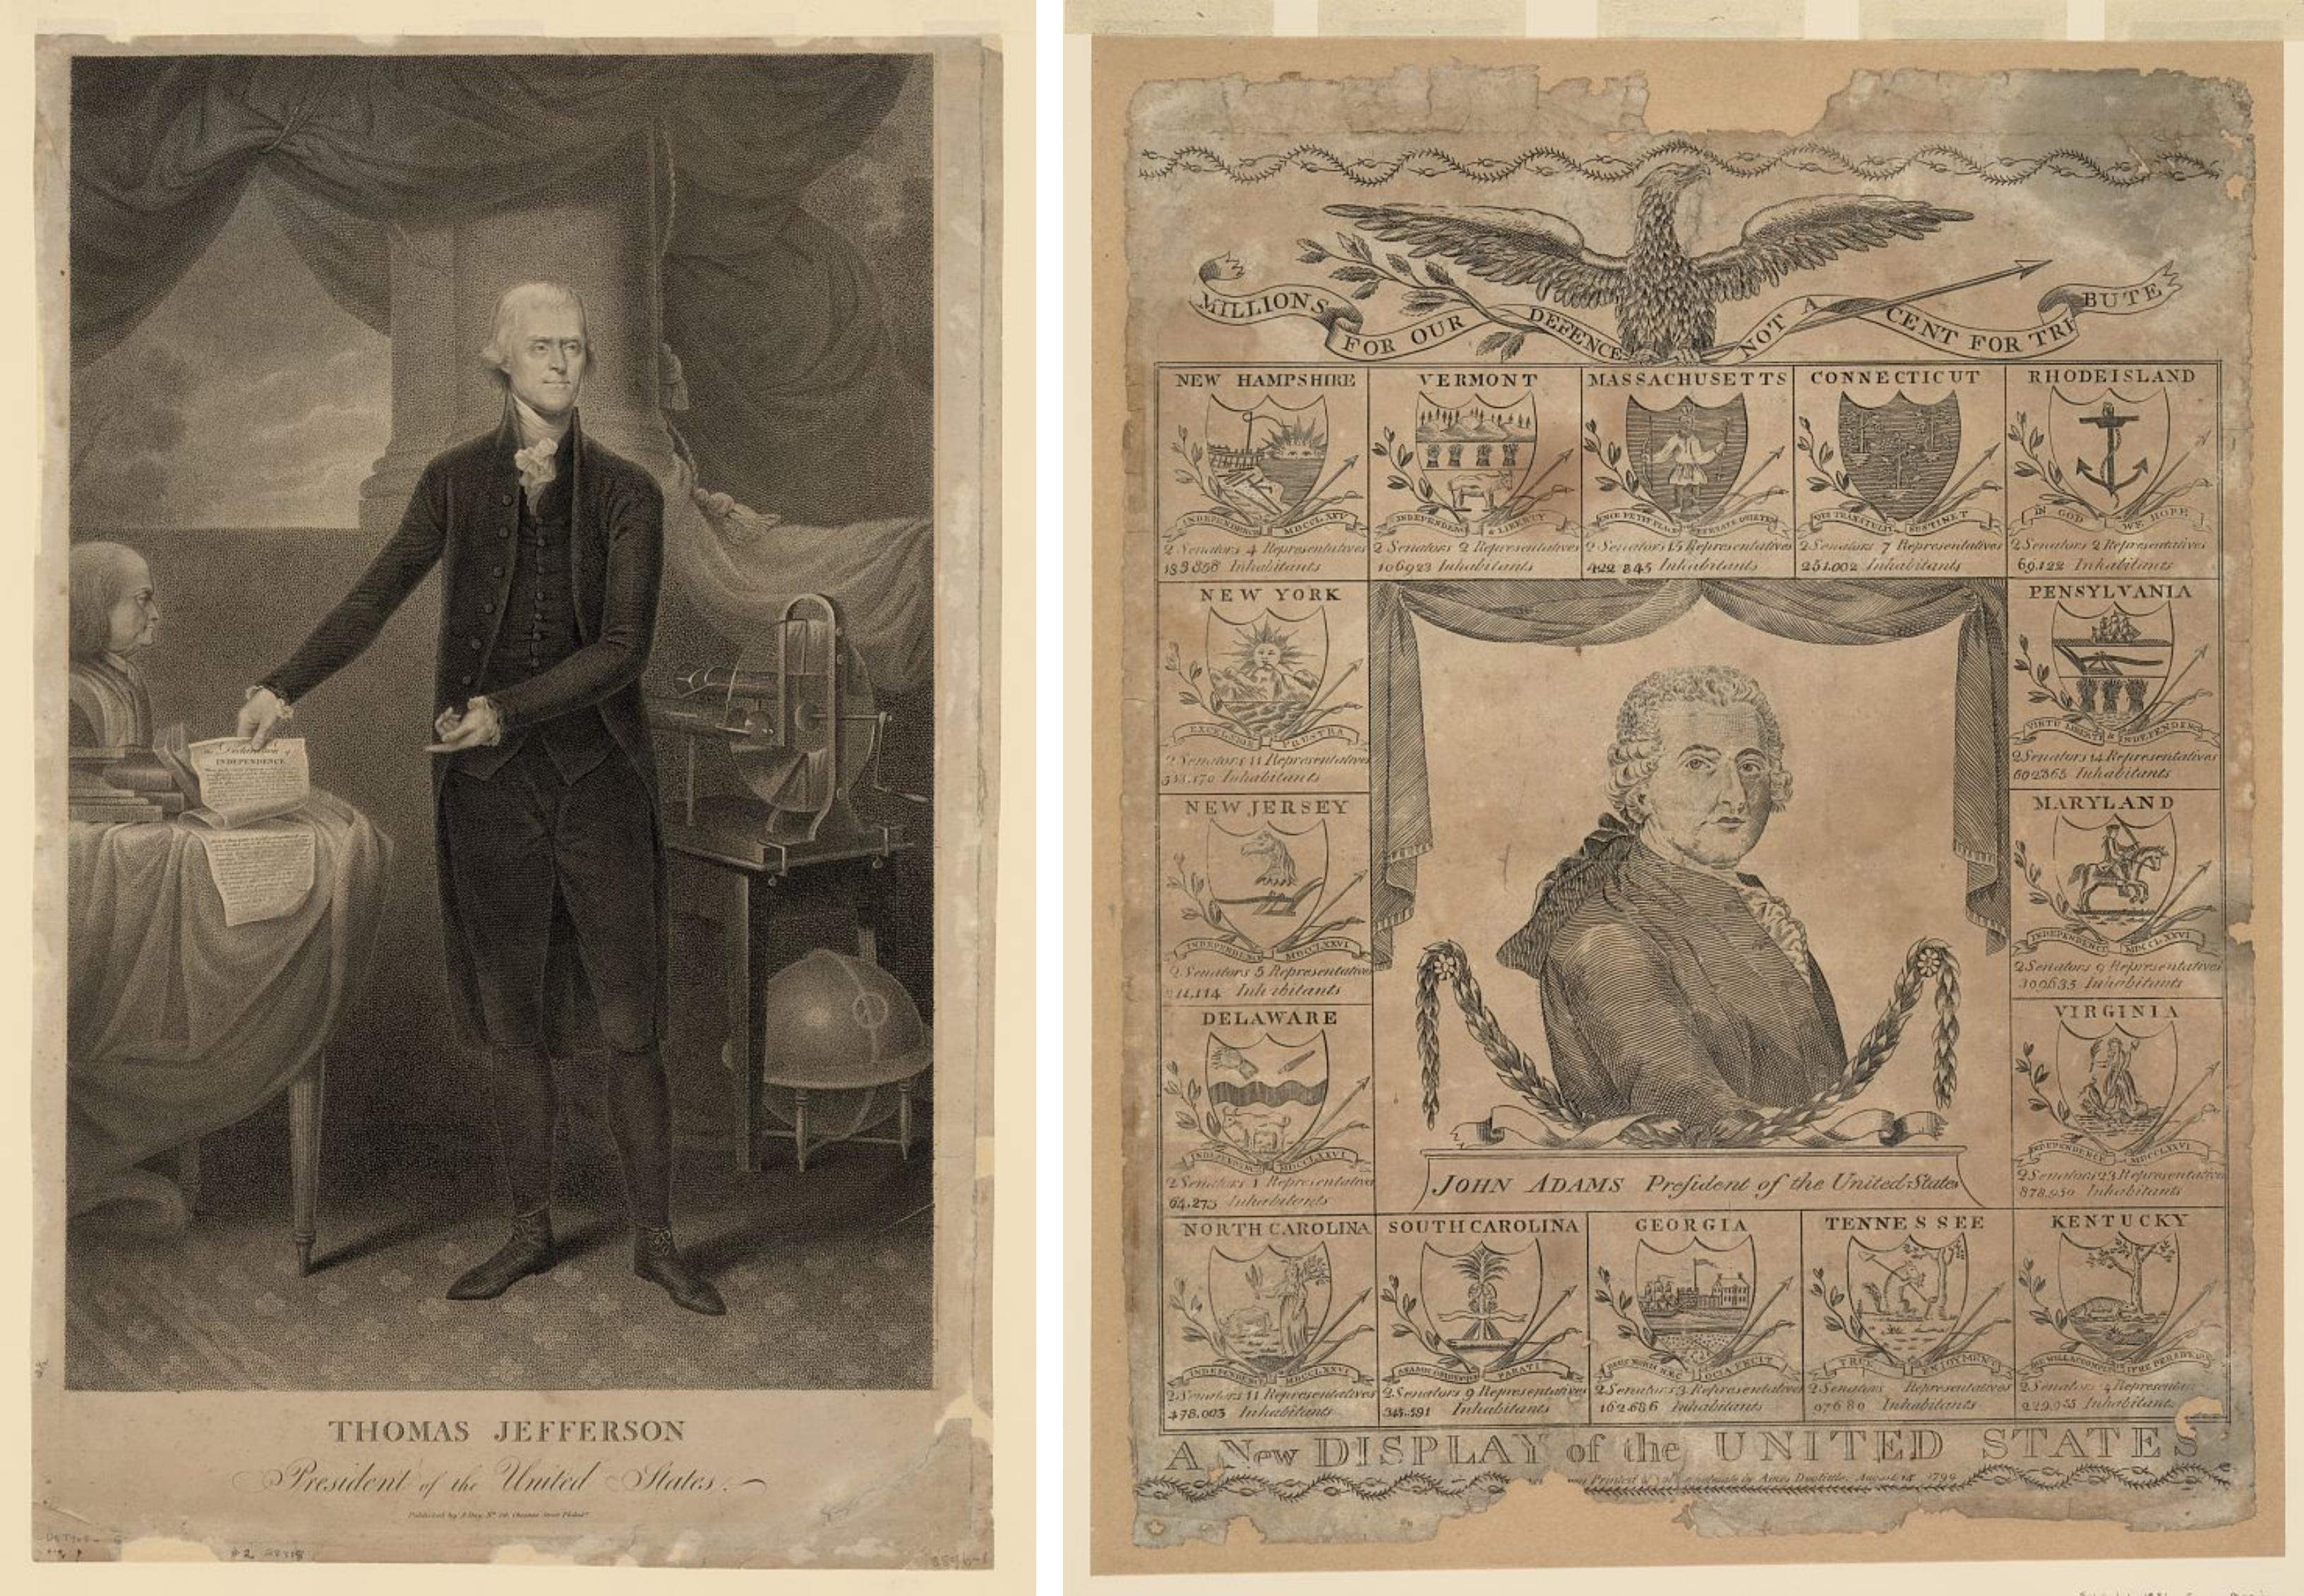 On the left, portrait of Thomas Jefferson. On the right, portrait of John Adams.